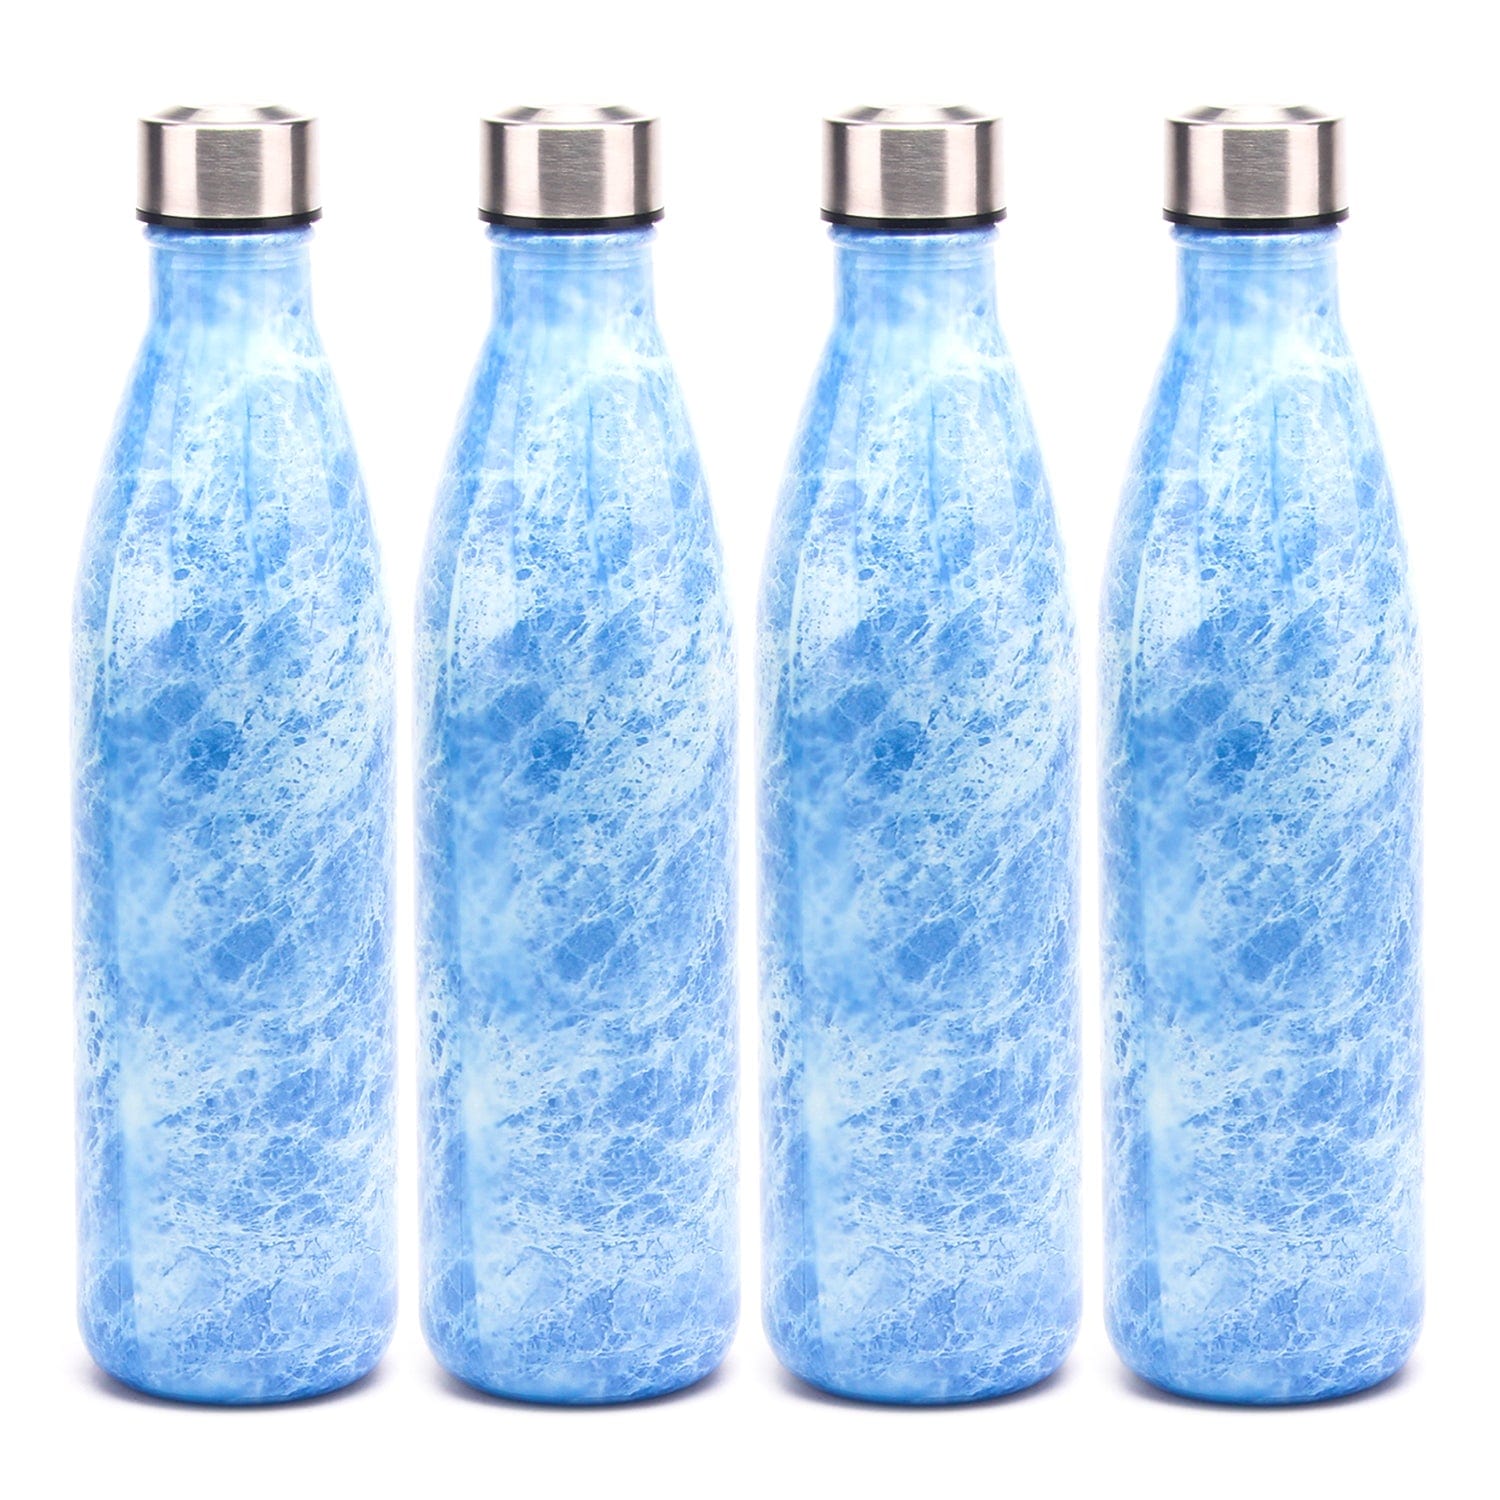 Red Butler Bottles Decorative Glass Bottle 1000ml | 4pcs Set | Blue QGBF10A3 Redbutler